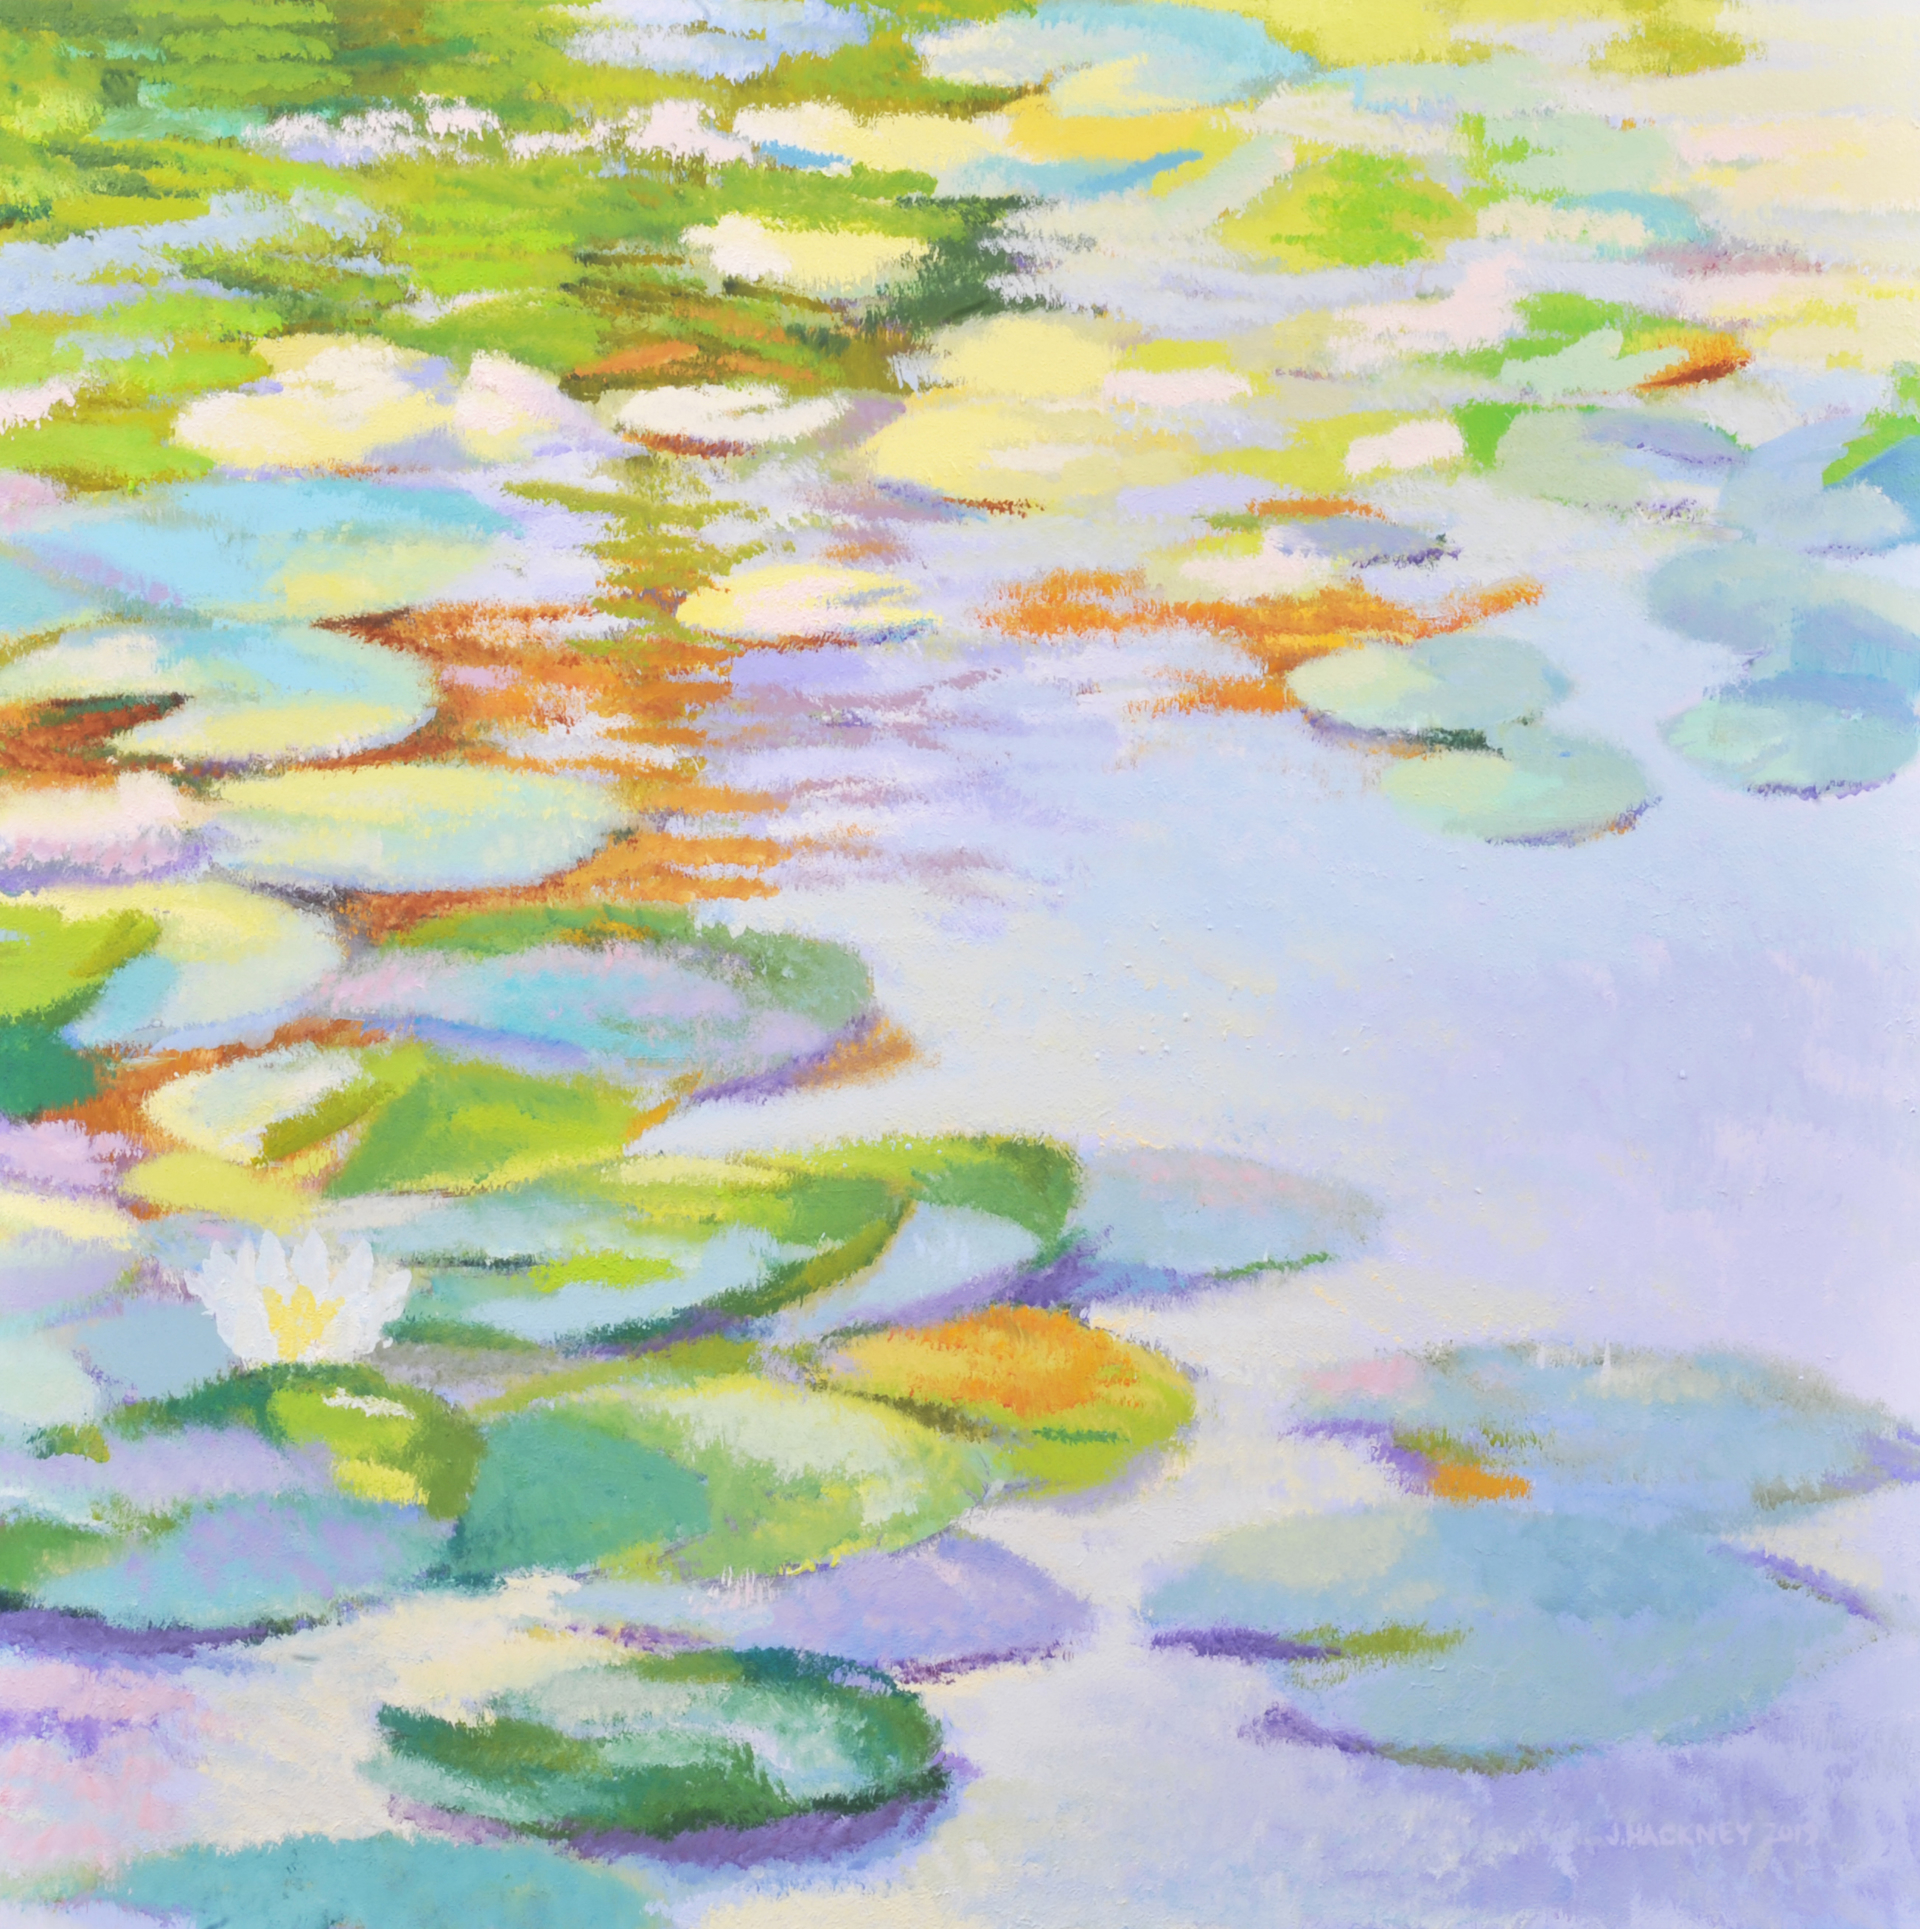 Water Lily by Jill Hackney